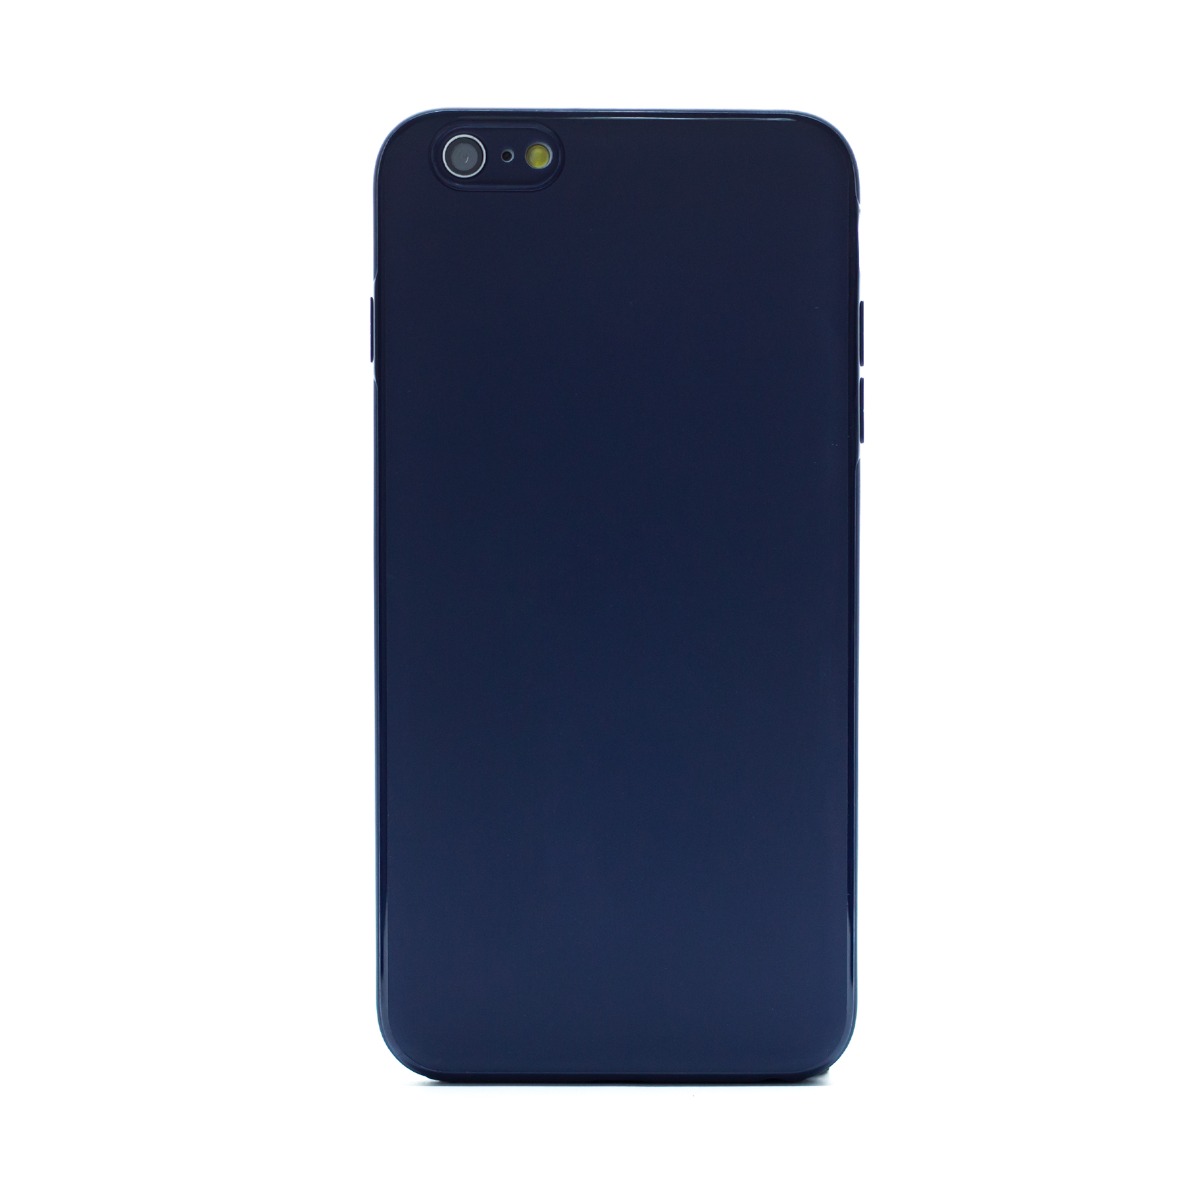 Husa spate silicon pentru iPhone 6 Plus iShield Albastru mat thumb